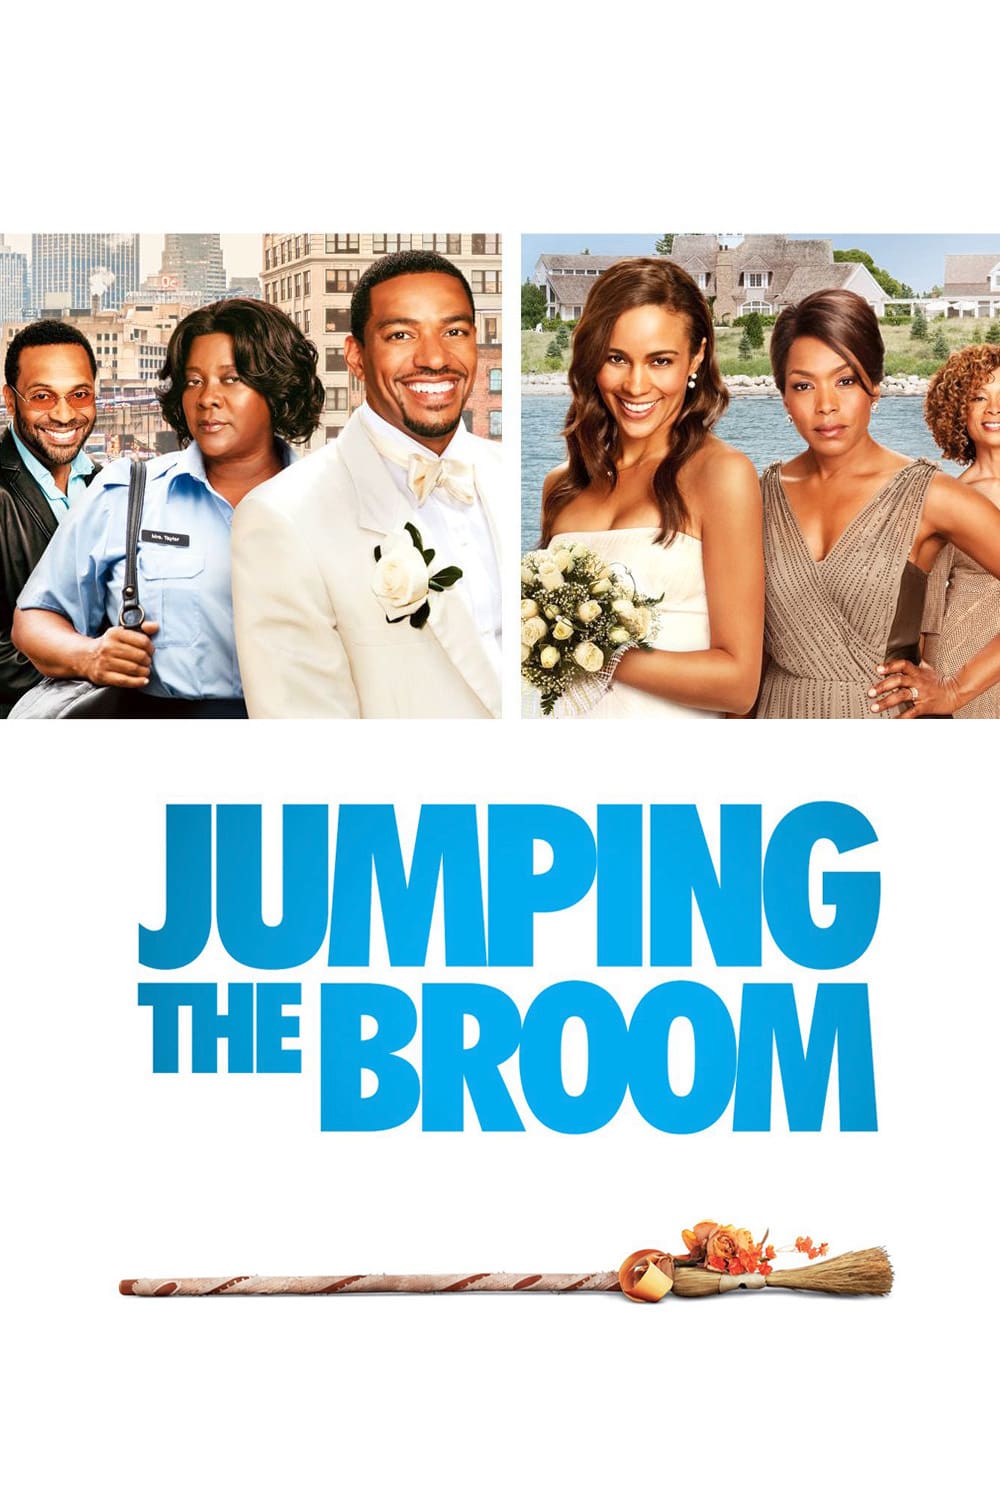 Plakat von "Jumping the Broom"